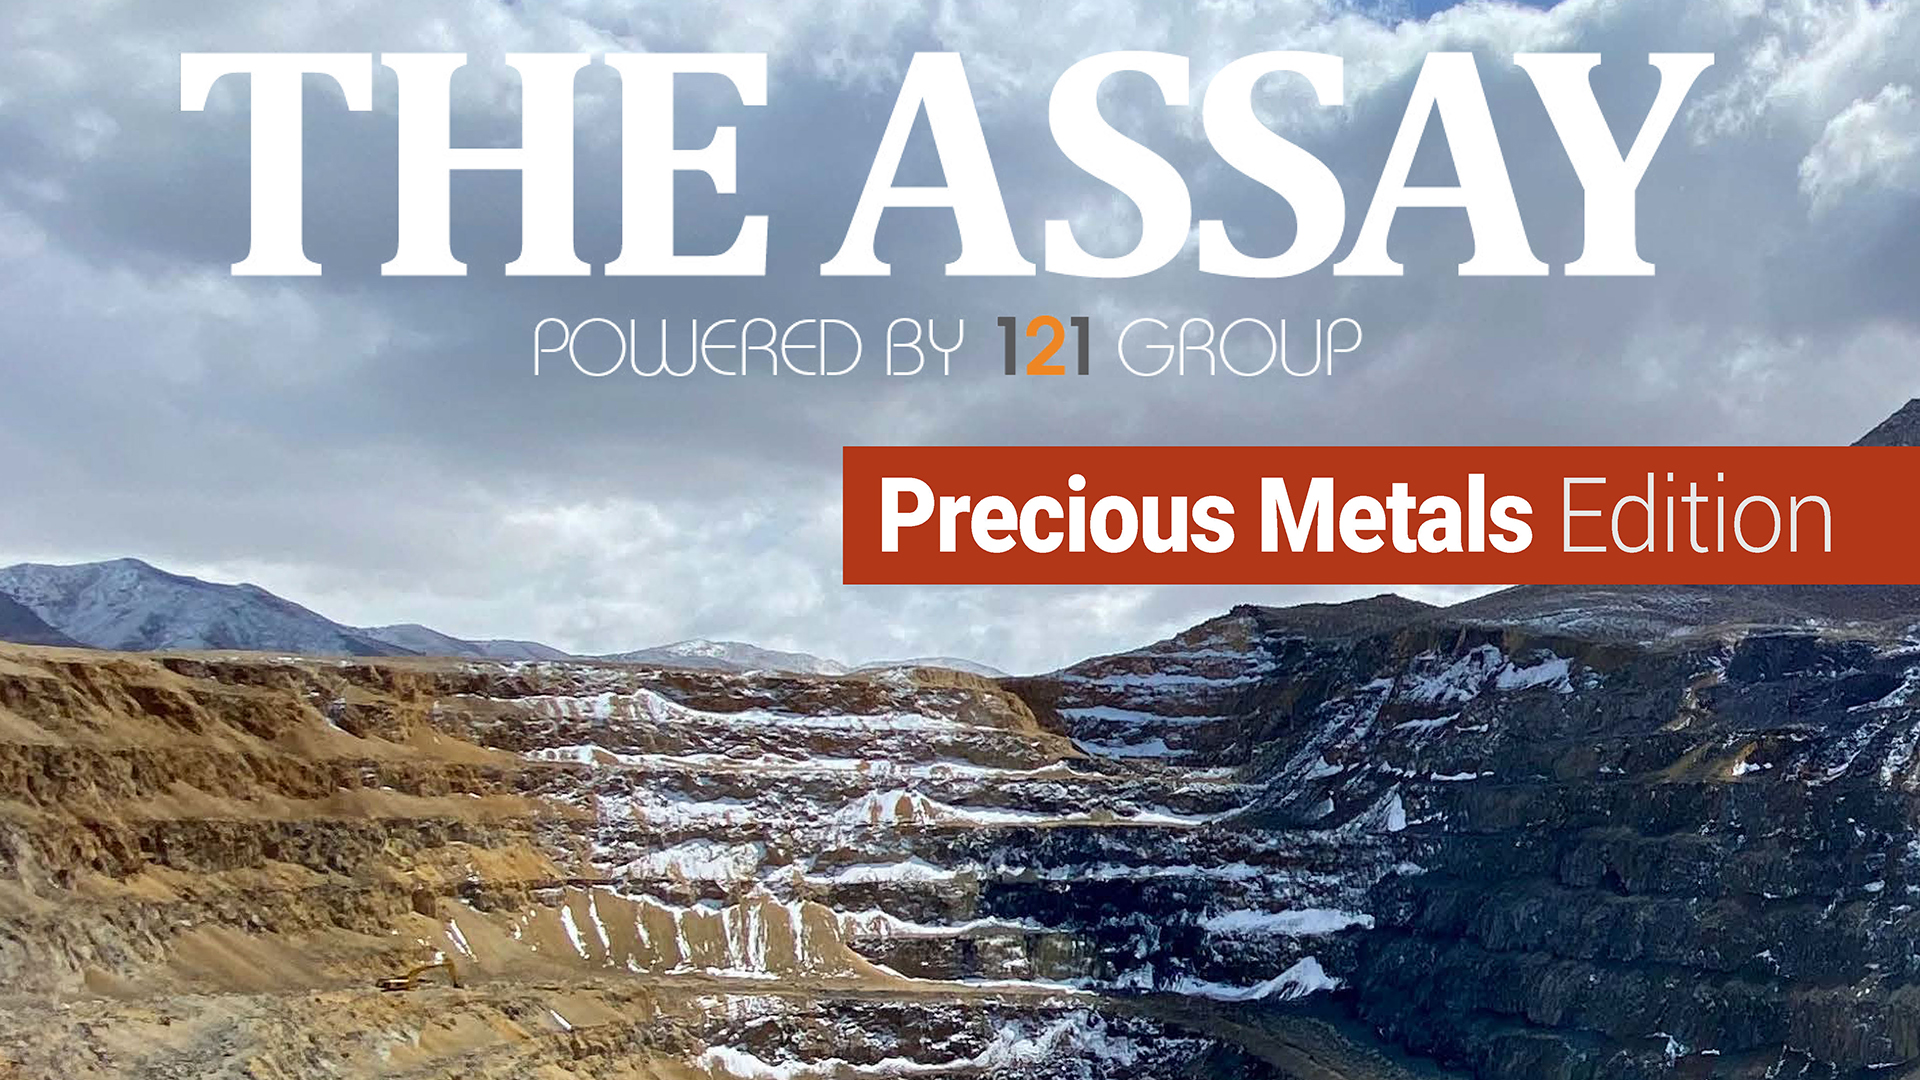 Barton Gold featured in The Assay Magazine’s 2022 Precious Metals Edition